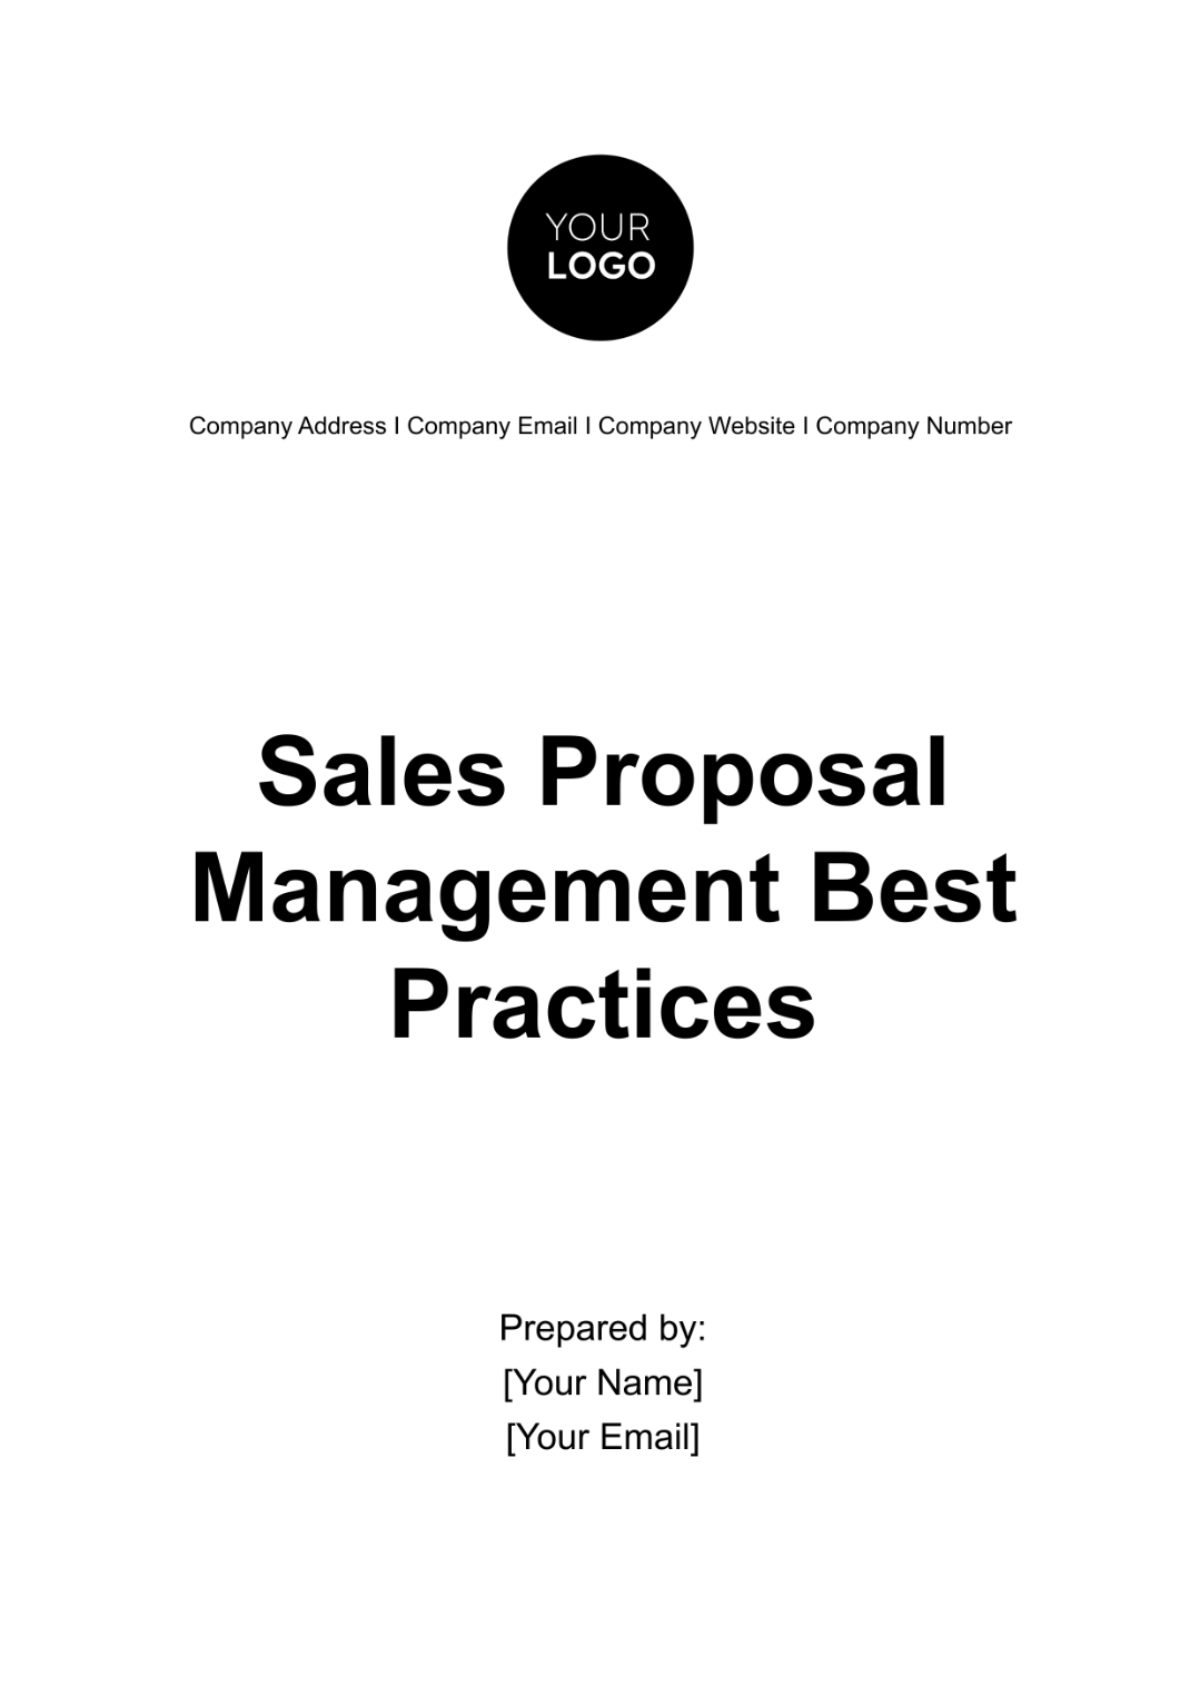 Free Sales Proposal Management Best Practices Template